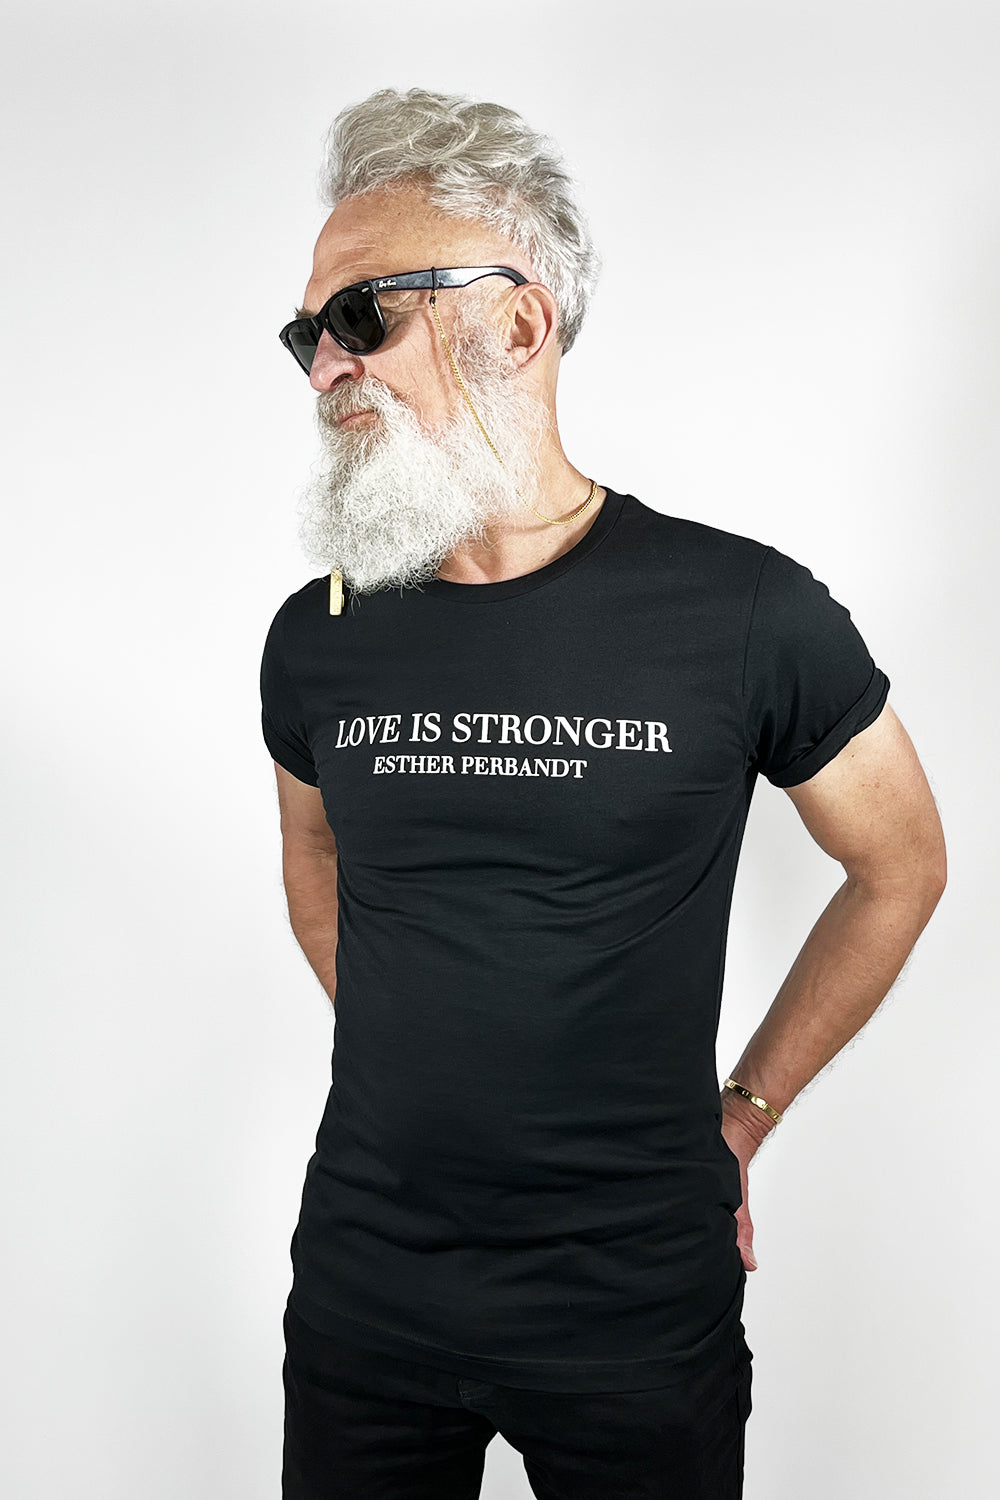 LOVE IS STRONGER - Statement T-Shirt - Men